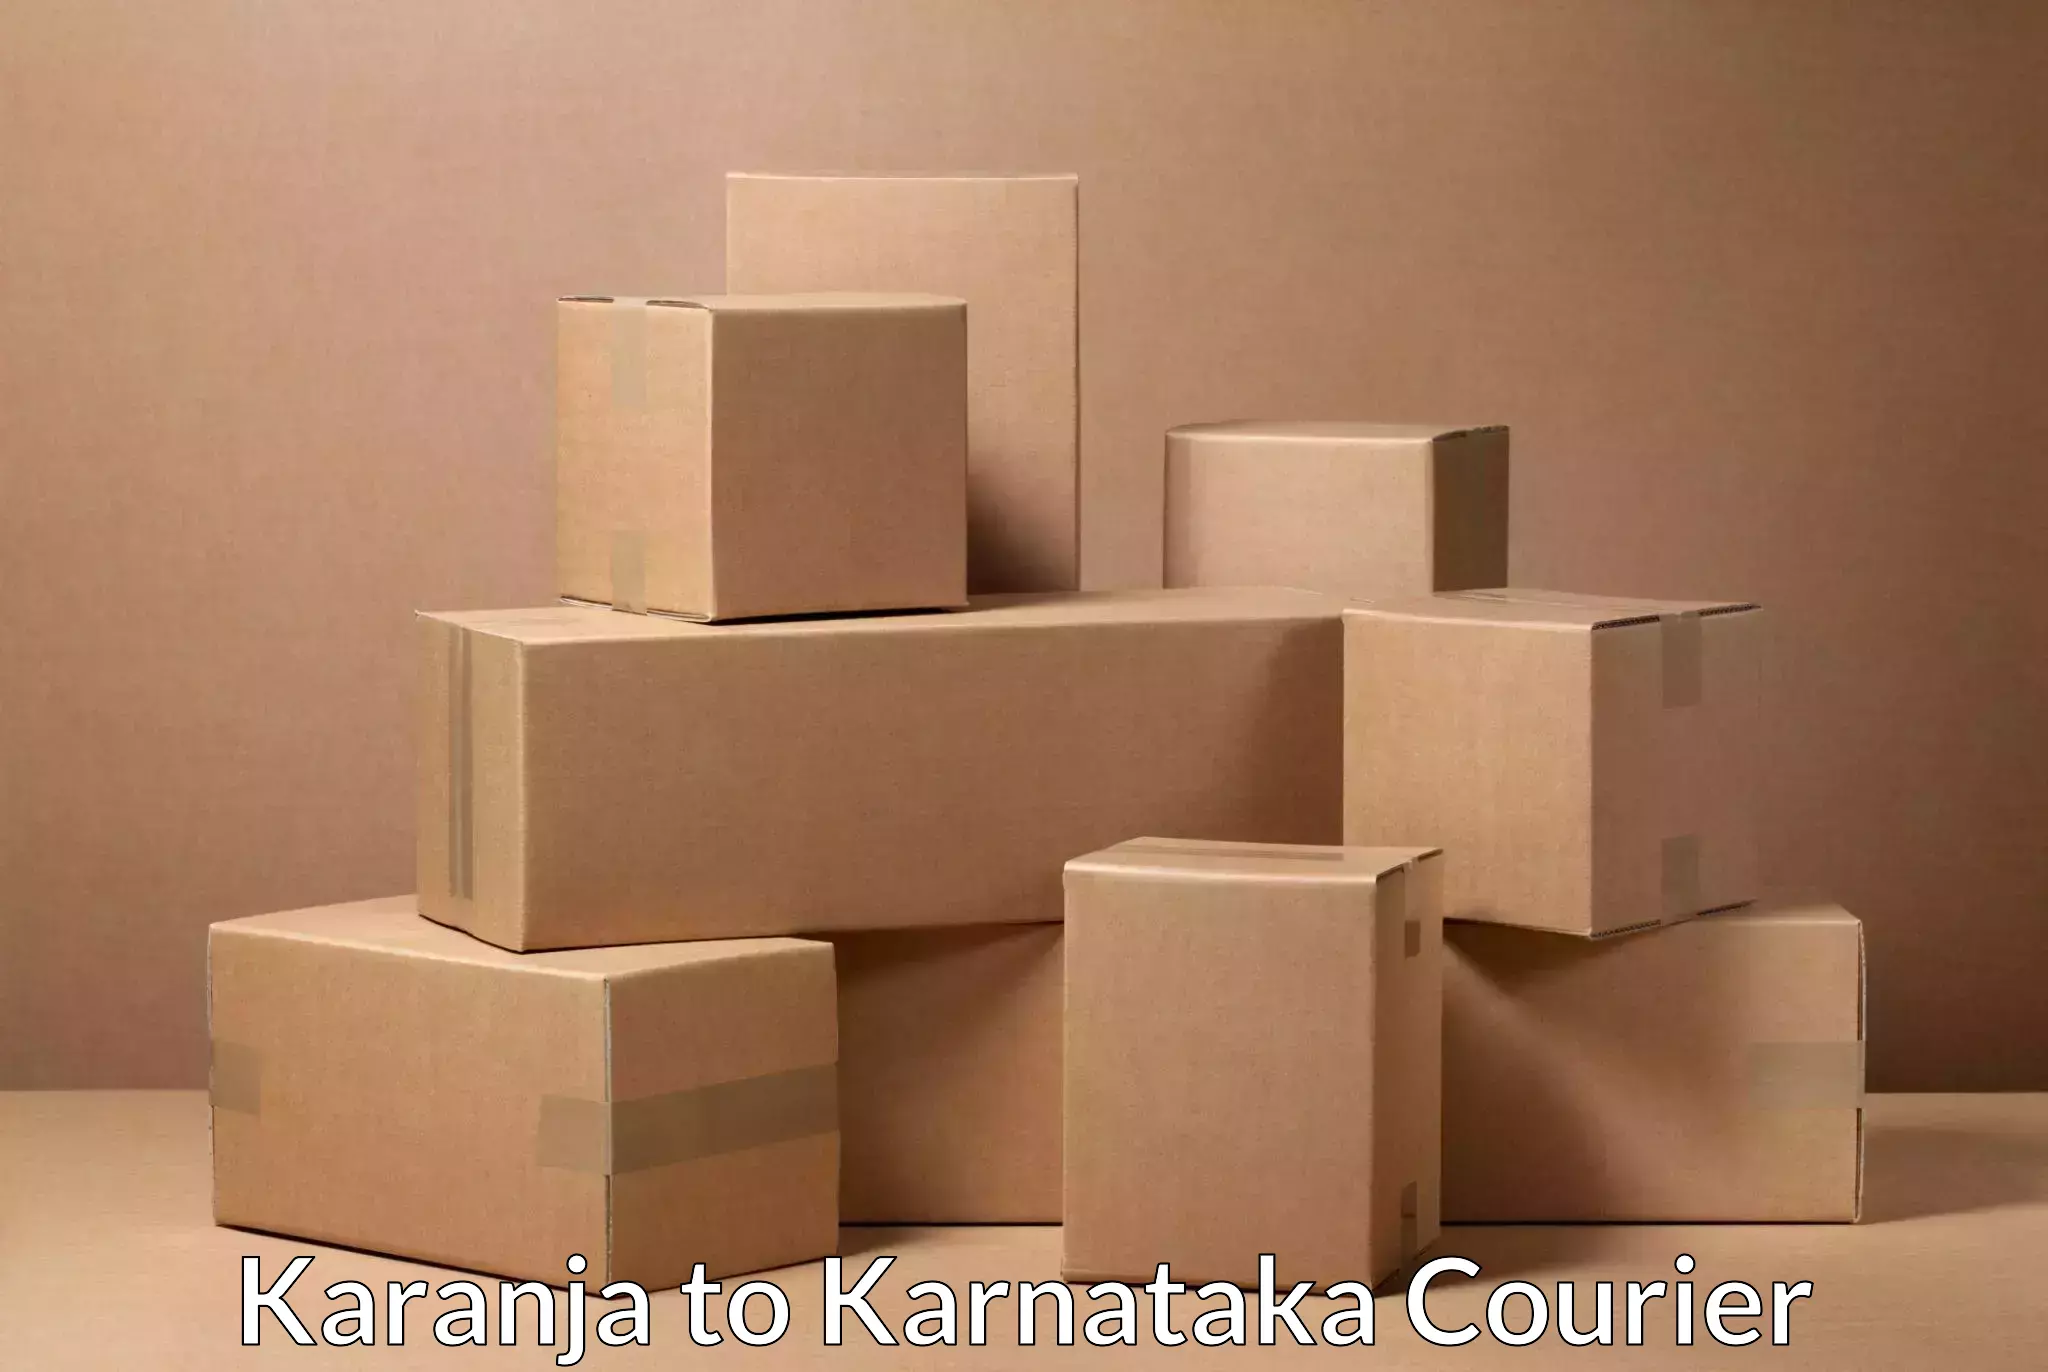 Cargo delivery service Karanja to Karnataka